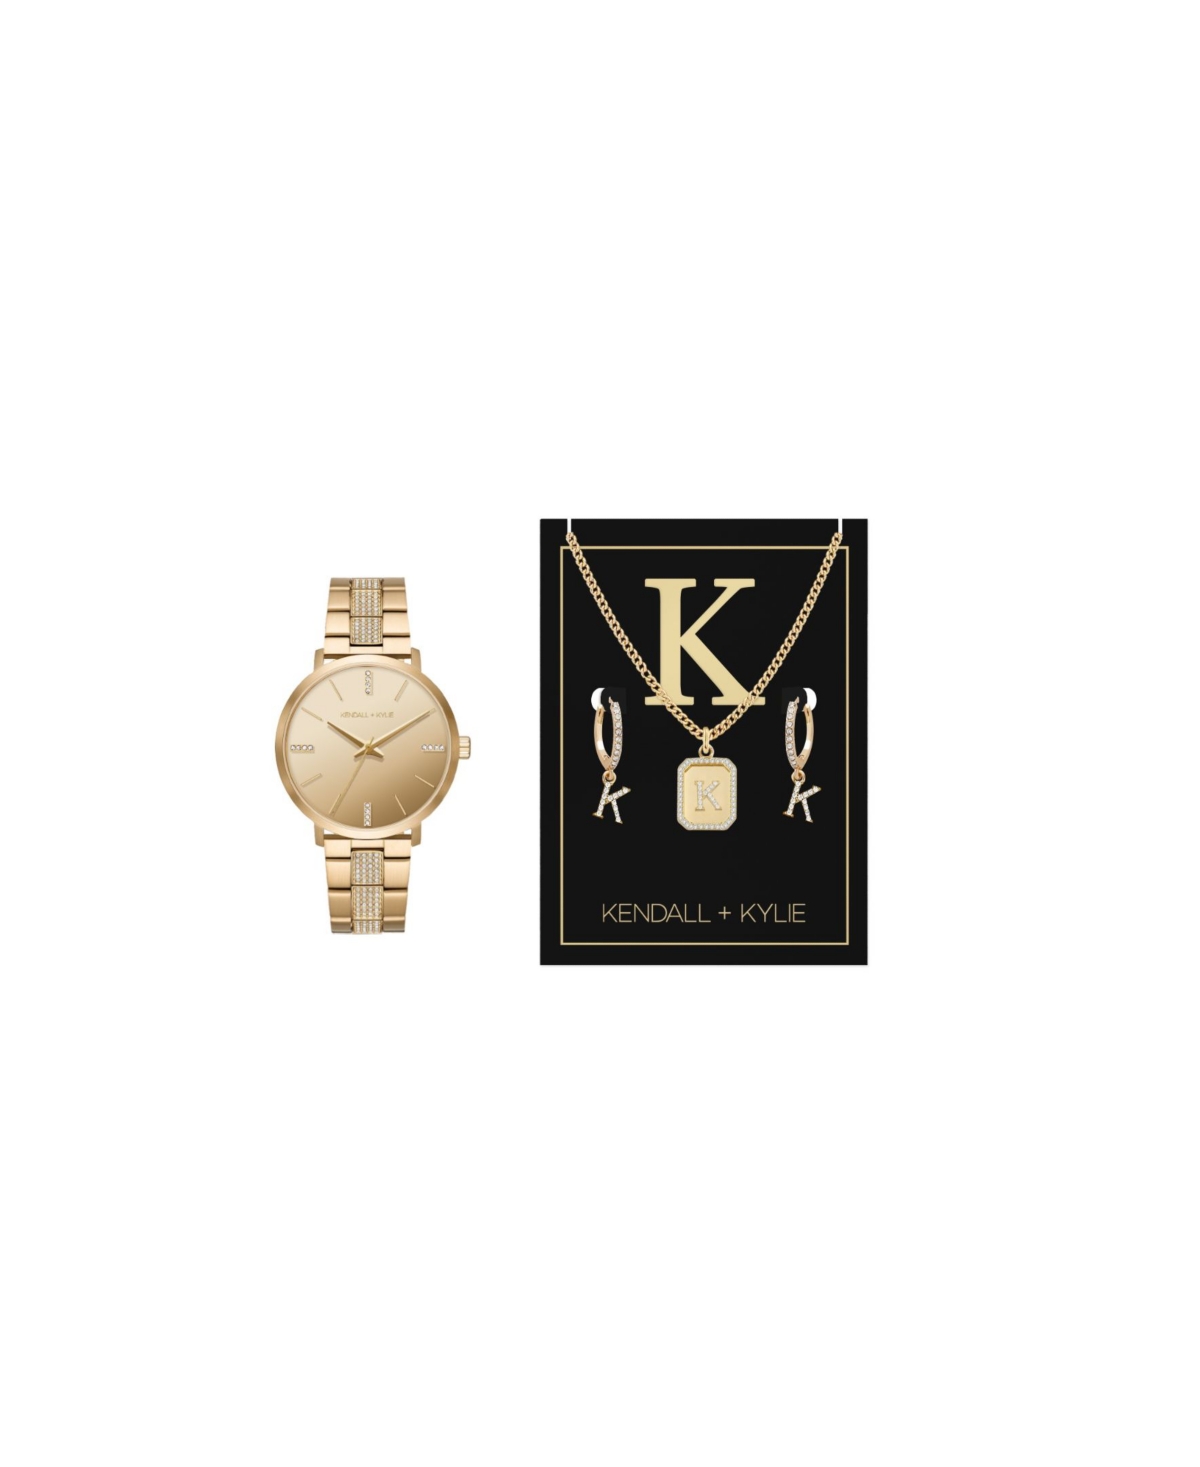 Kendall + Kylie Women's Analog Shiny Gold-tone Metal Alloy Bracelet Watch 38mm Gift Set